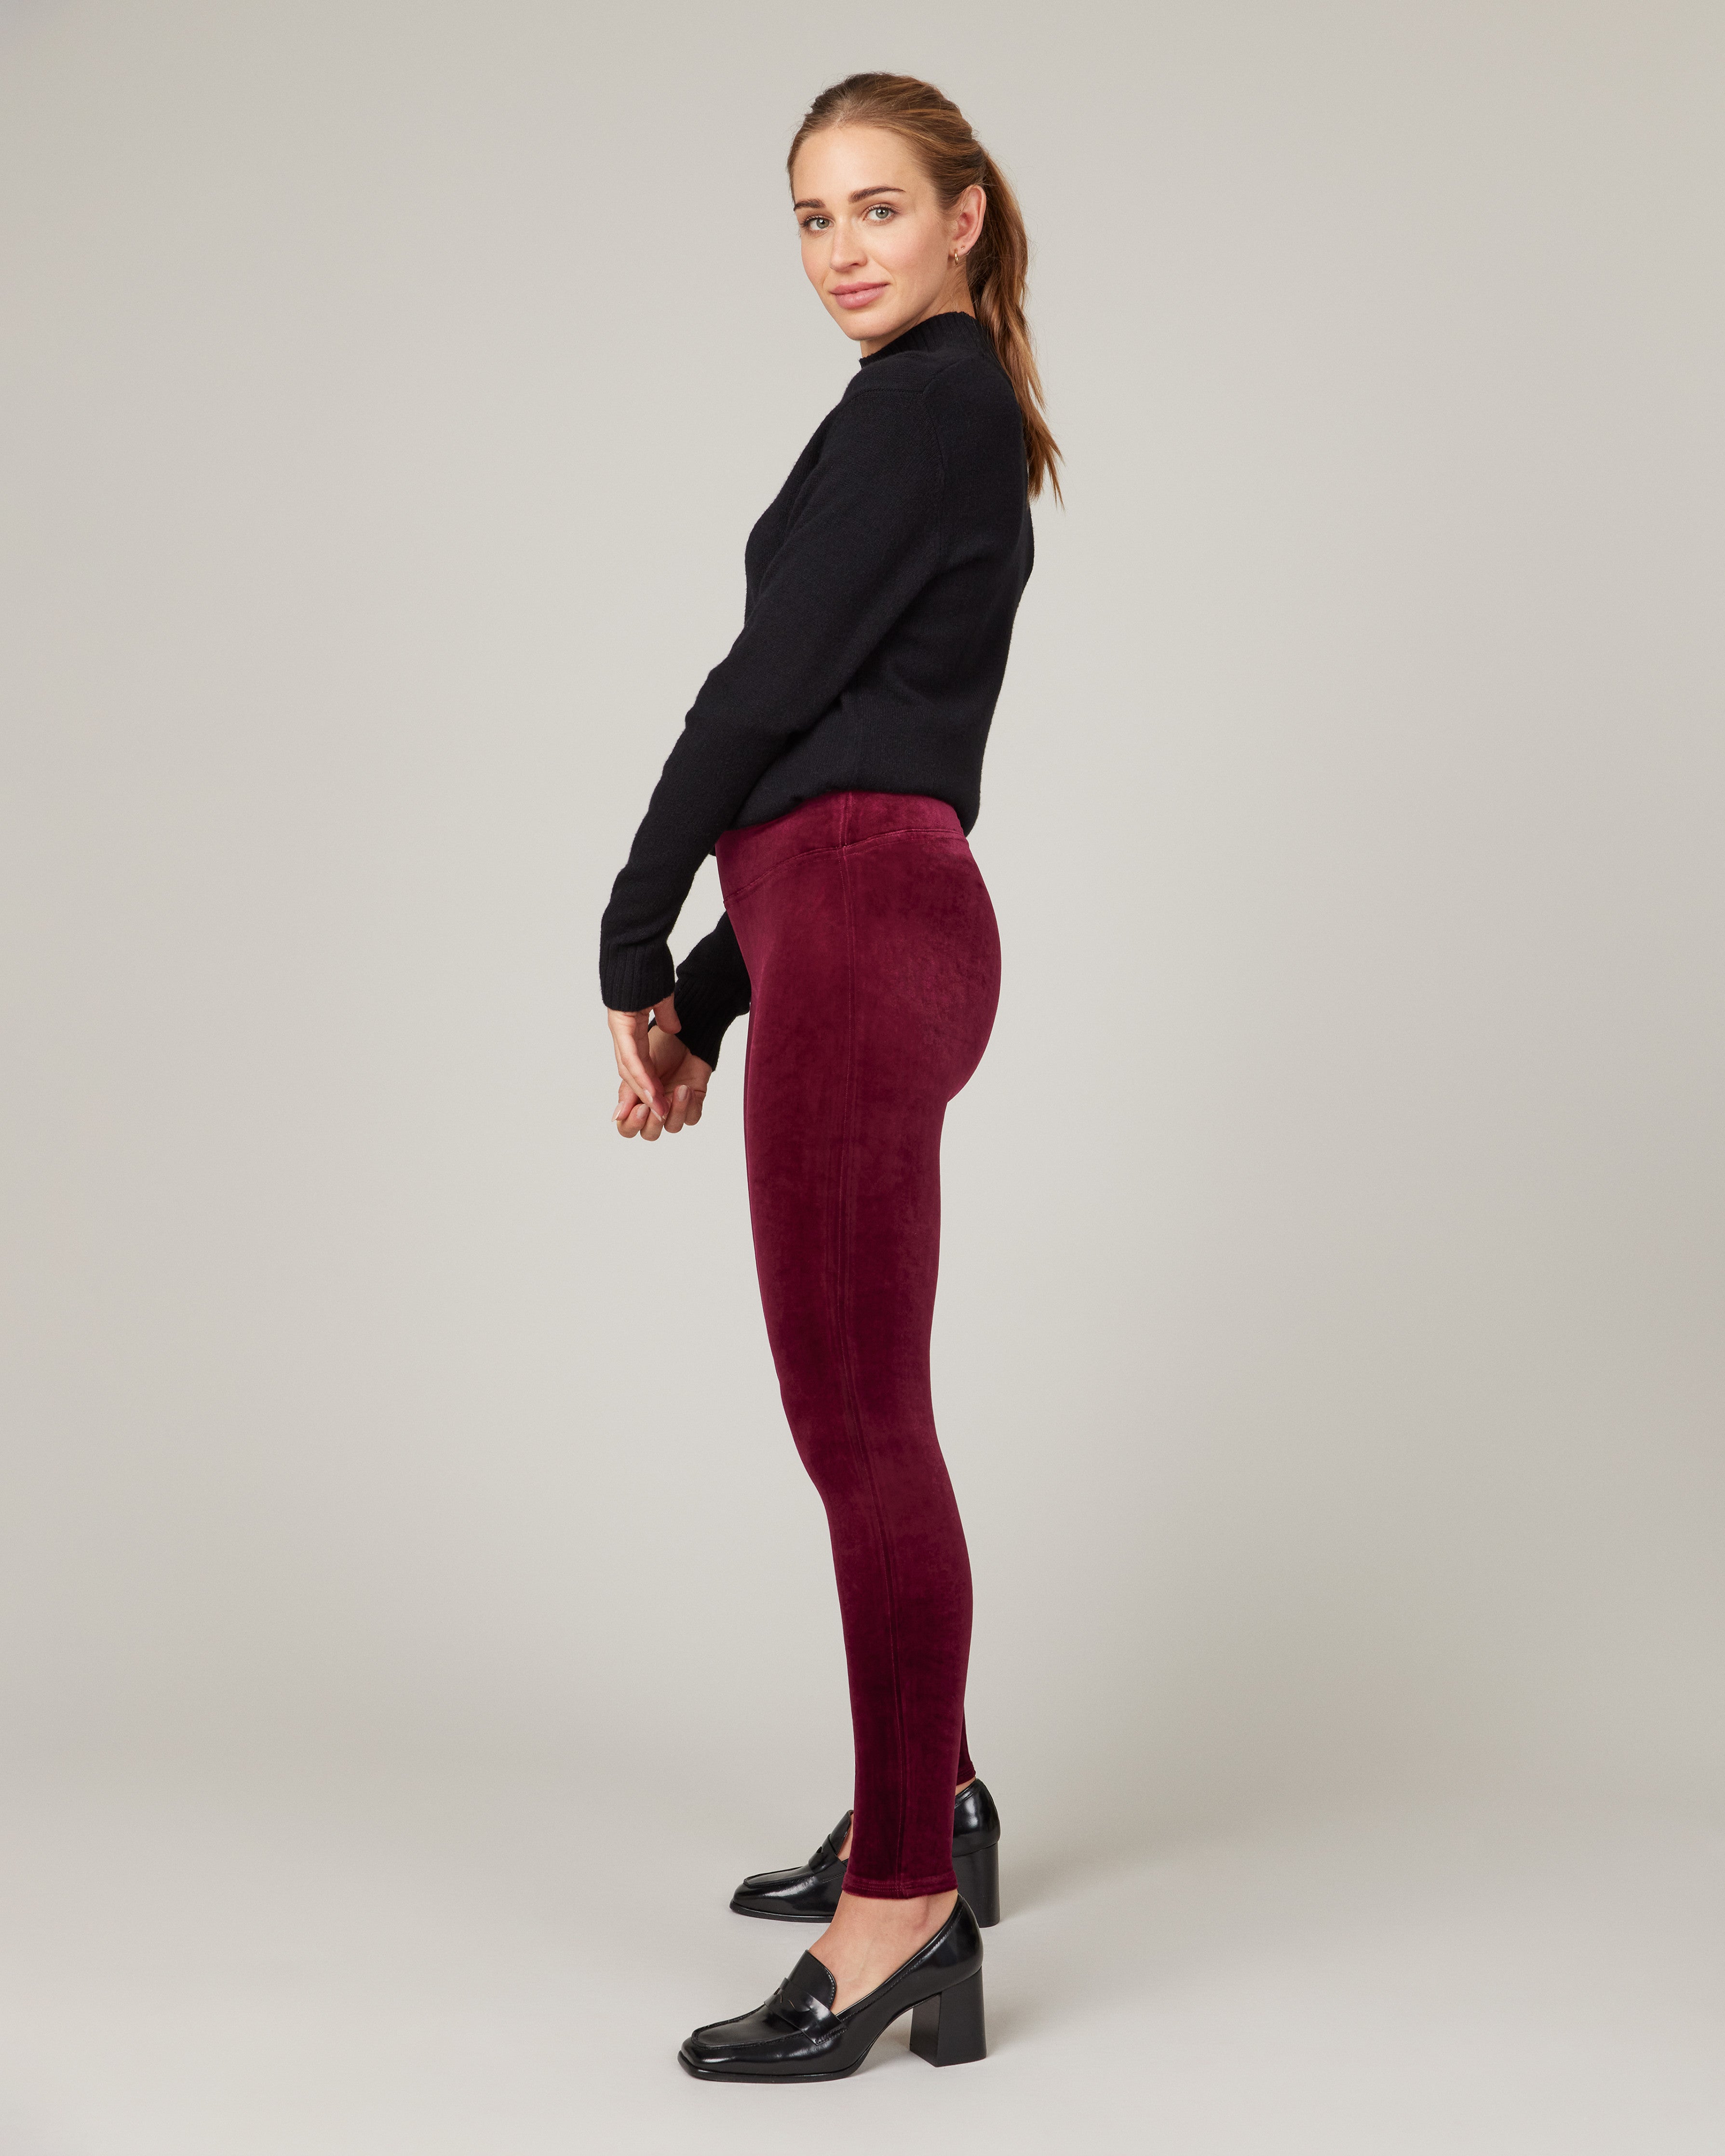 Spanx Ready To Wow! Velvet Leggings in Black Style 2070 Women's Size M